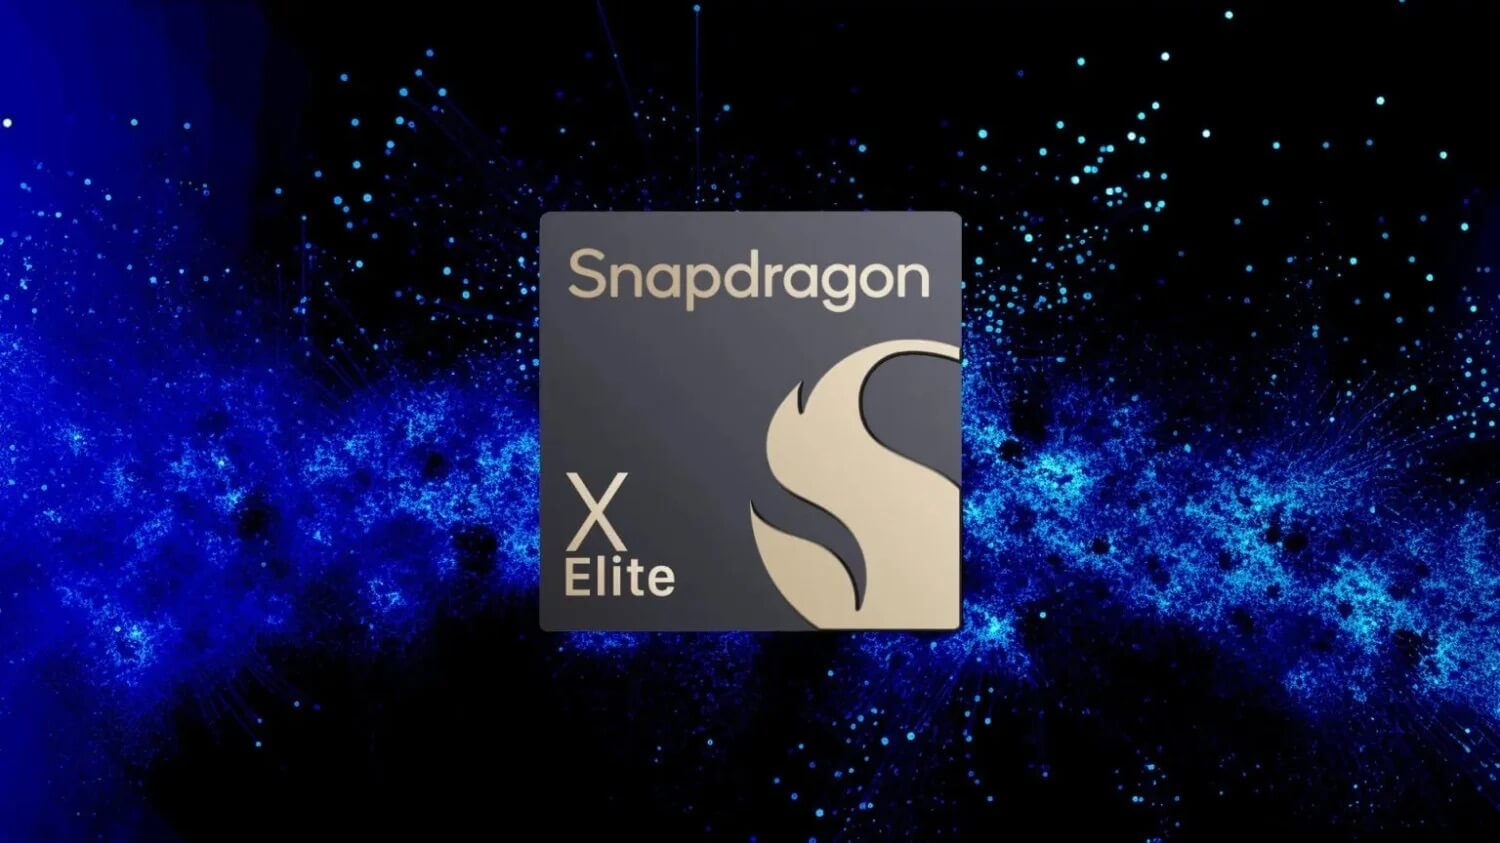 Snapdragon X Elite rumor